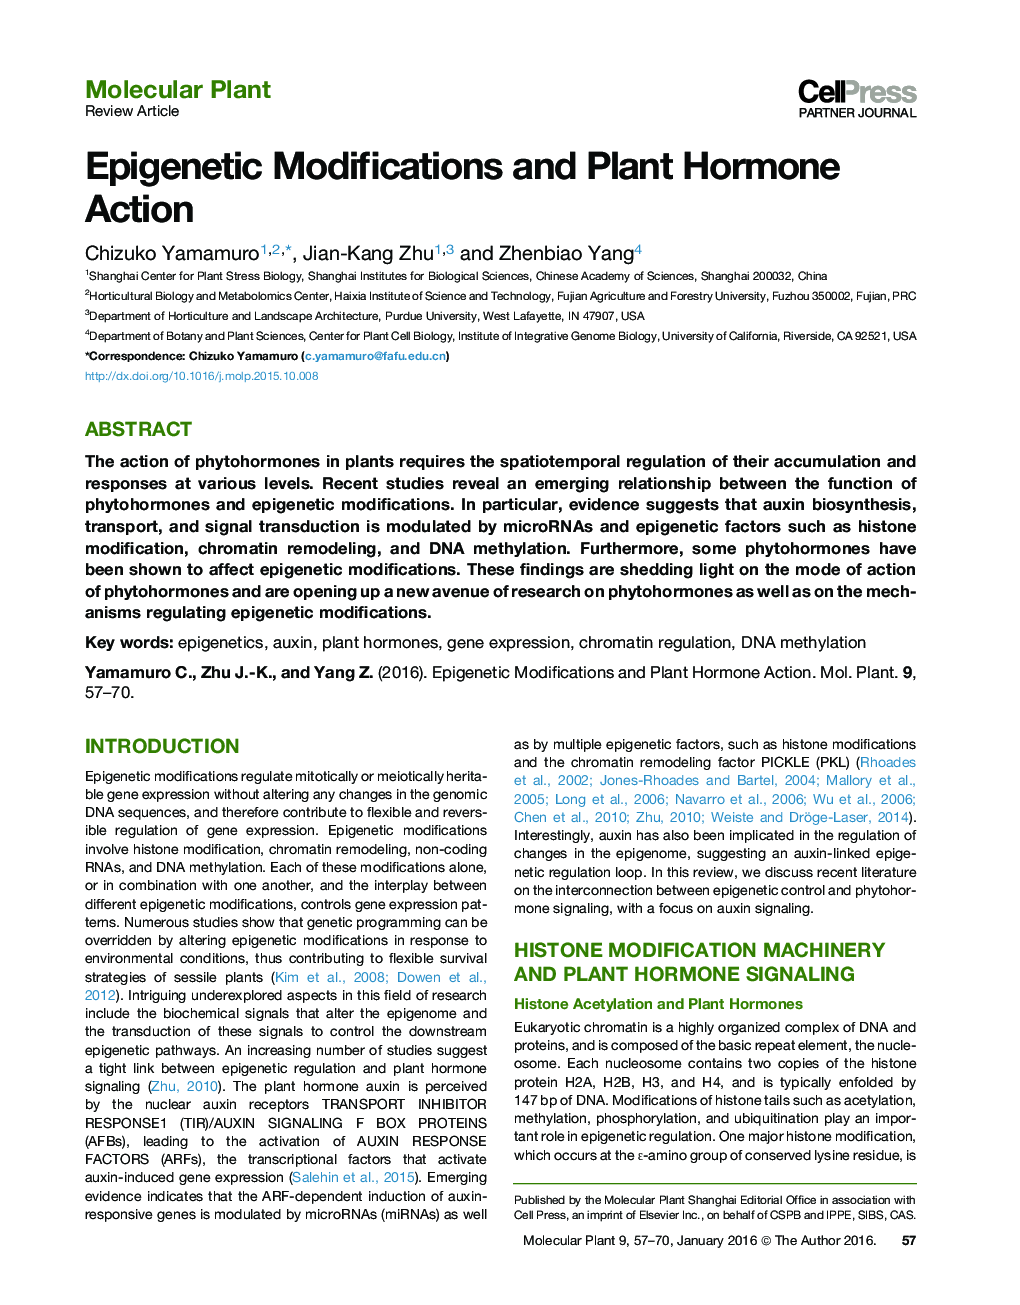 تغییرات اپیگنتیک و عمل هورمون گیاهی 